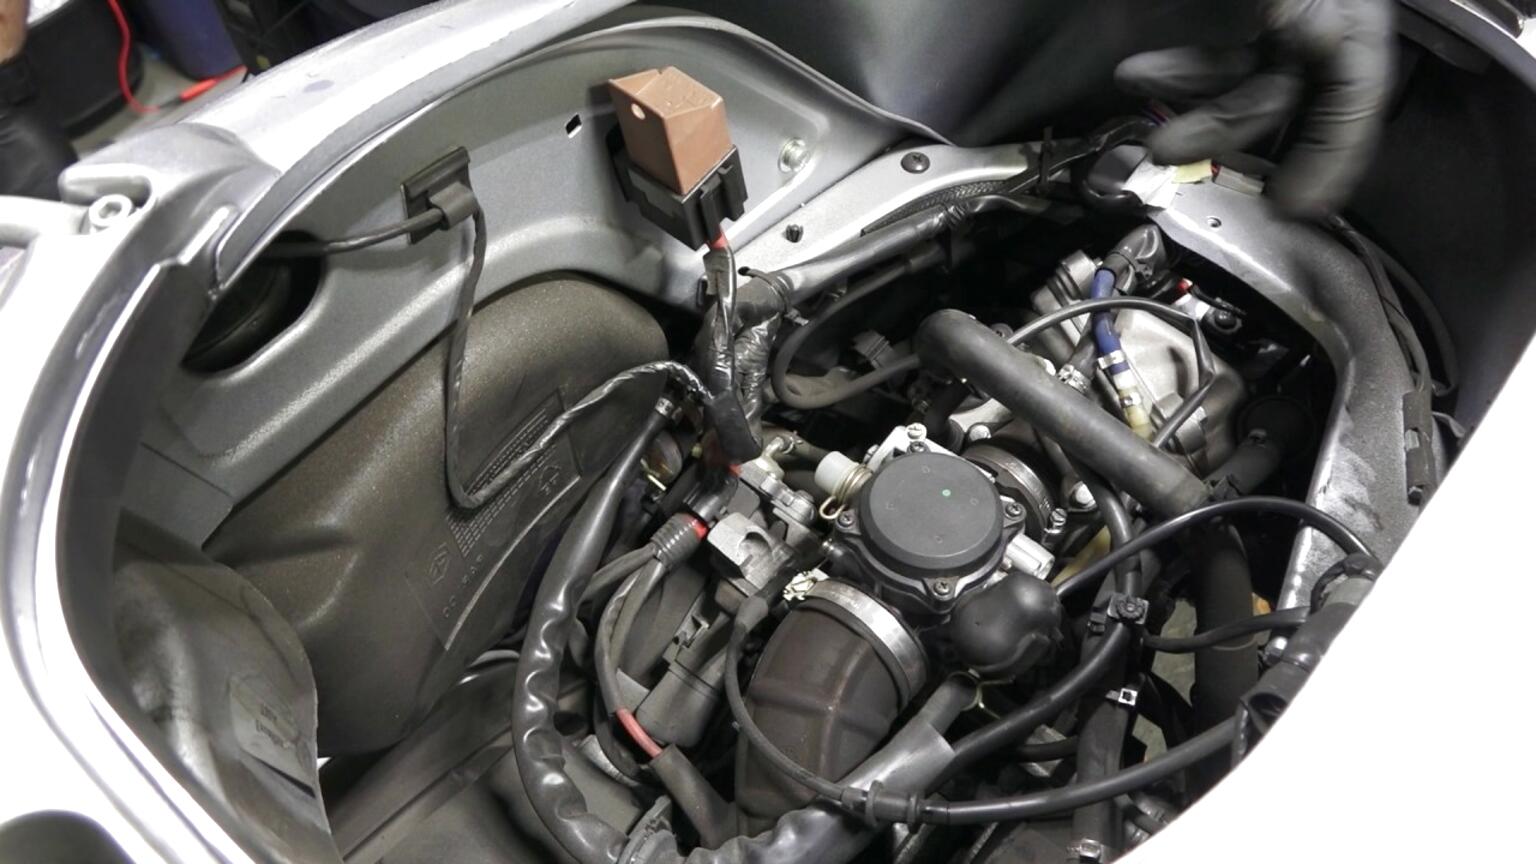 Vespa Gt 200 Engine for sale in UK | View 59 bargains